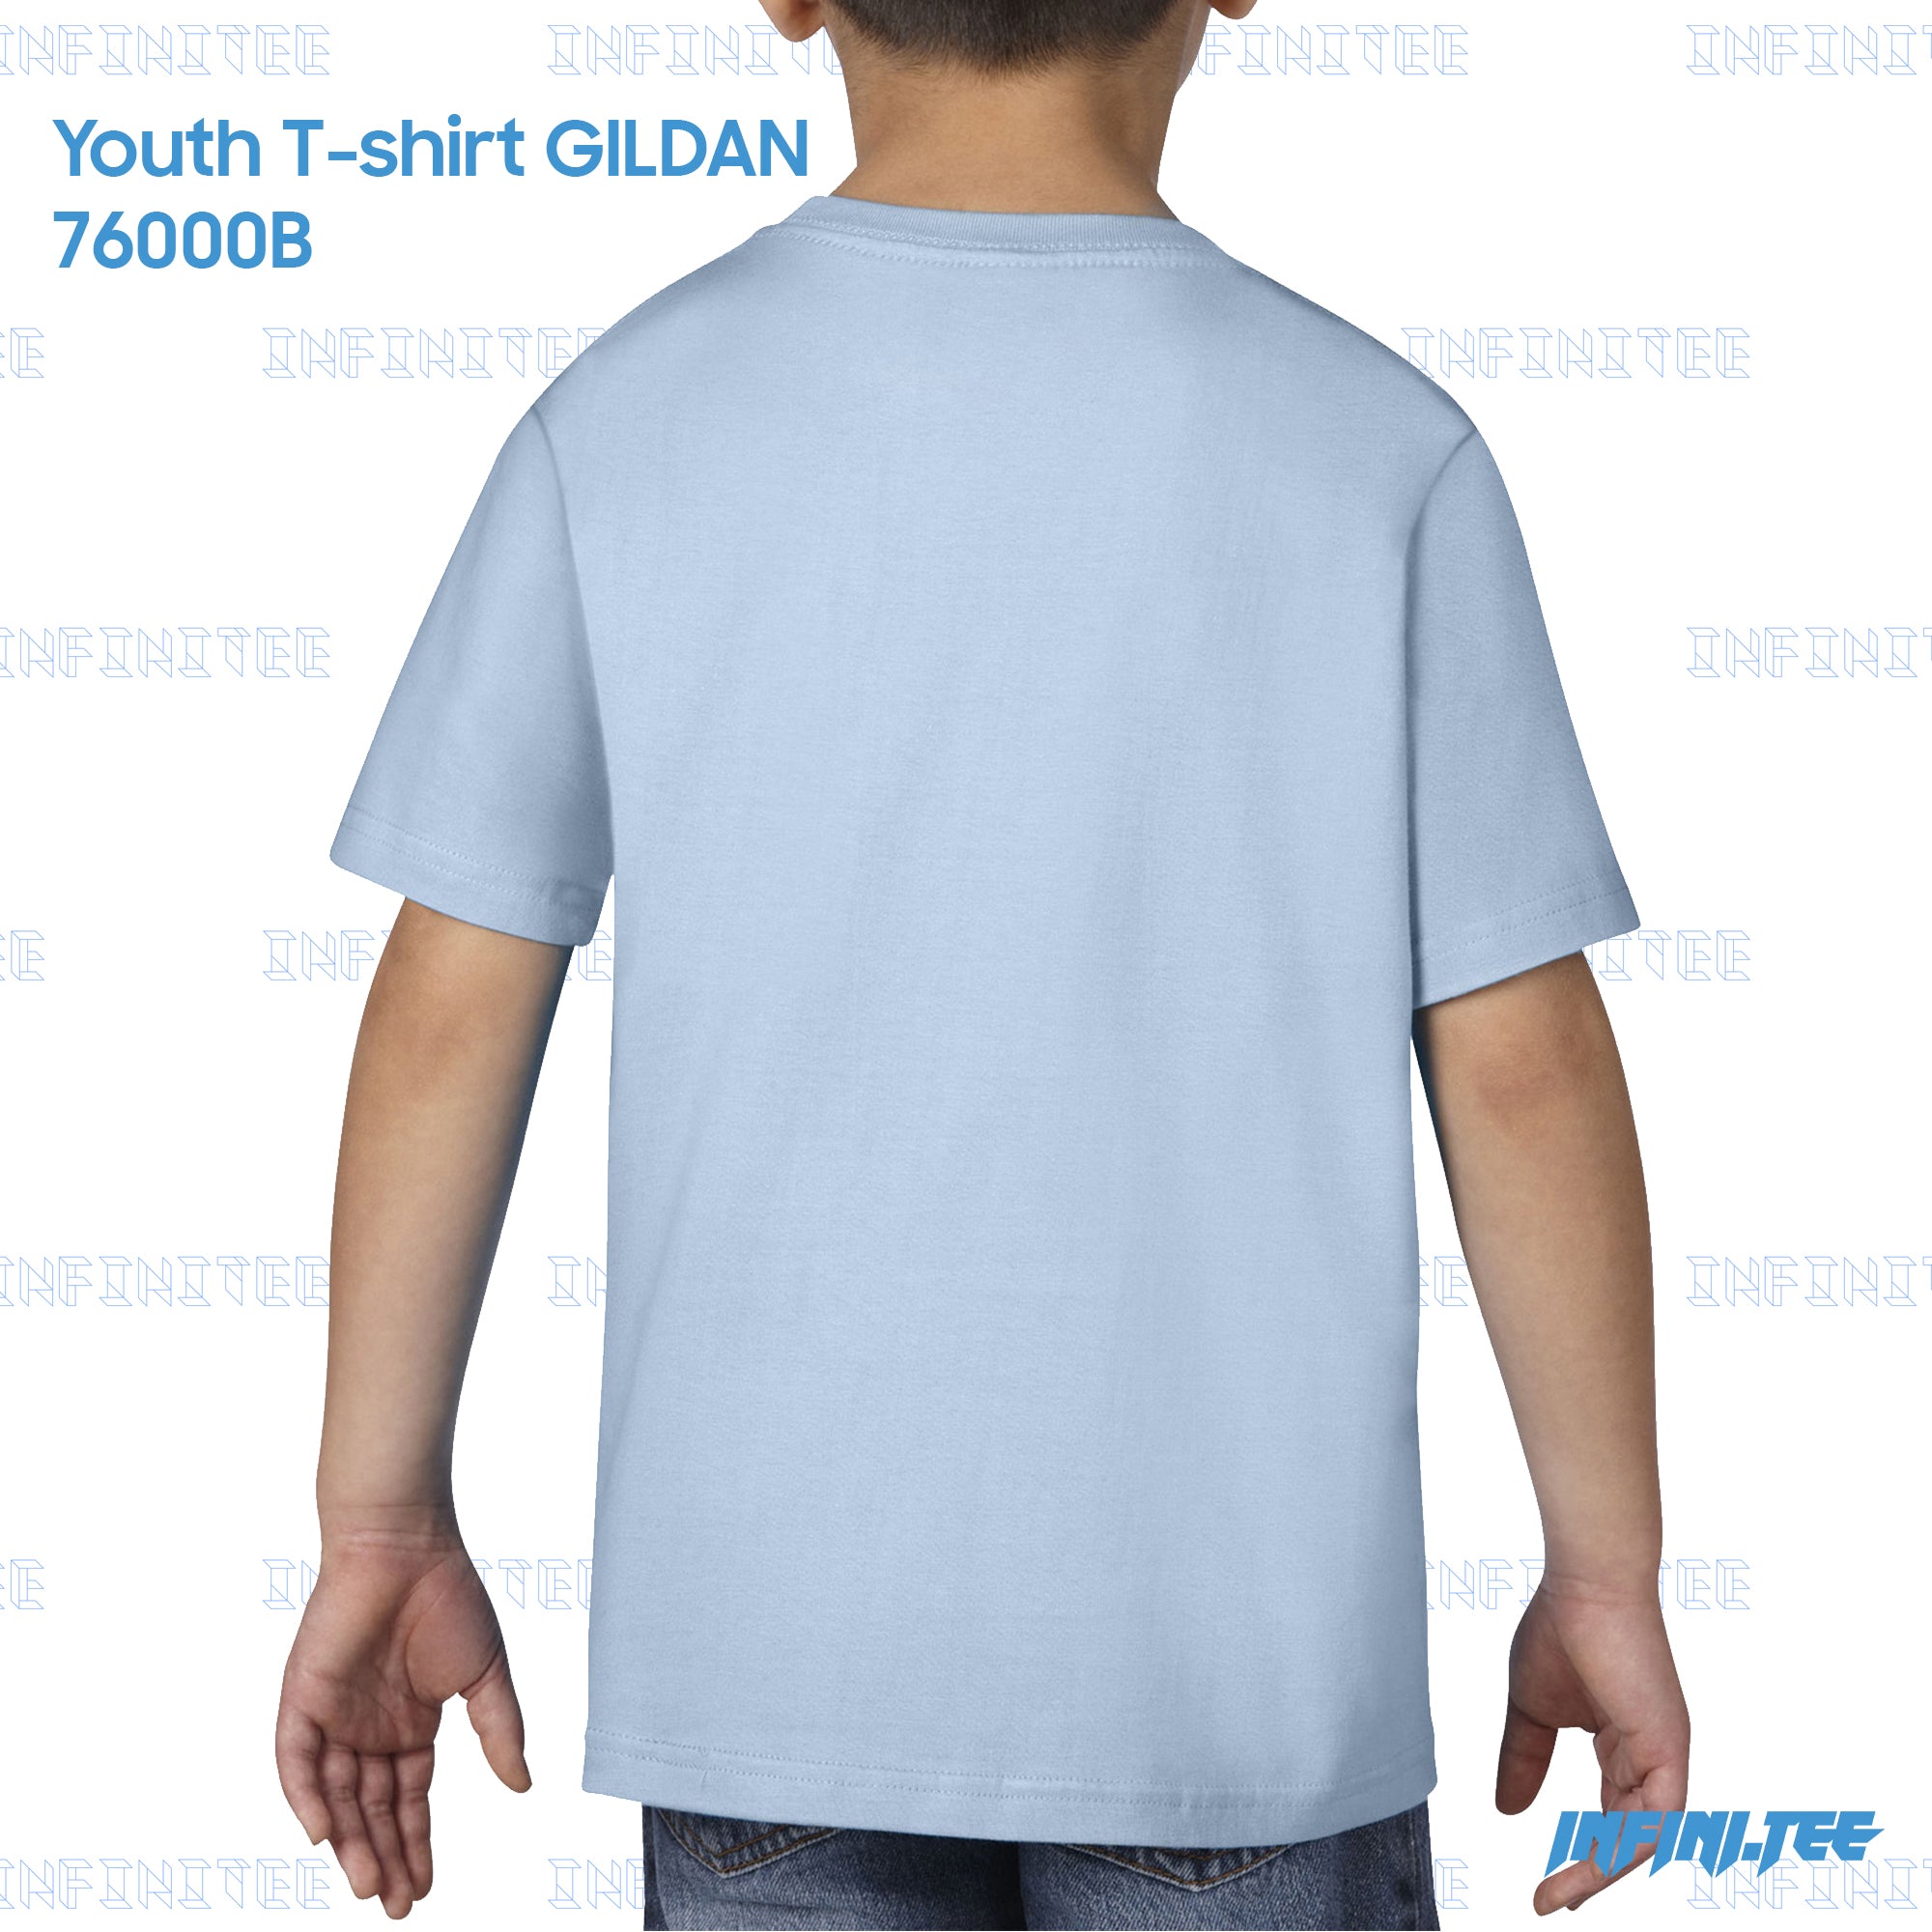 Youth T-shirt 76000B GILDAN - LIGHT BLUE